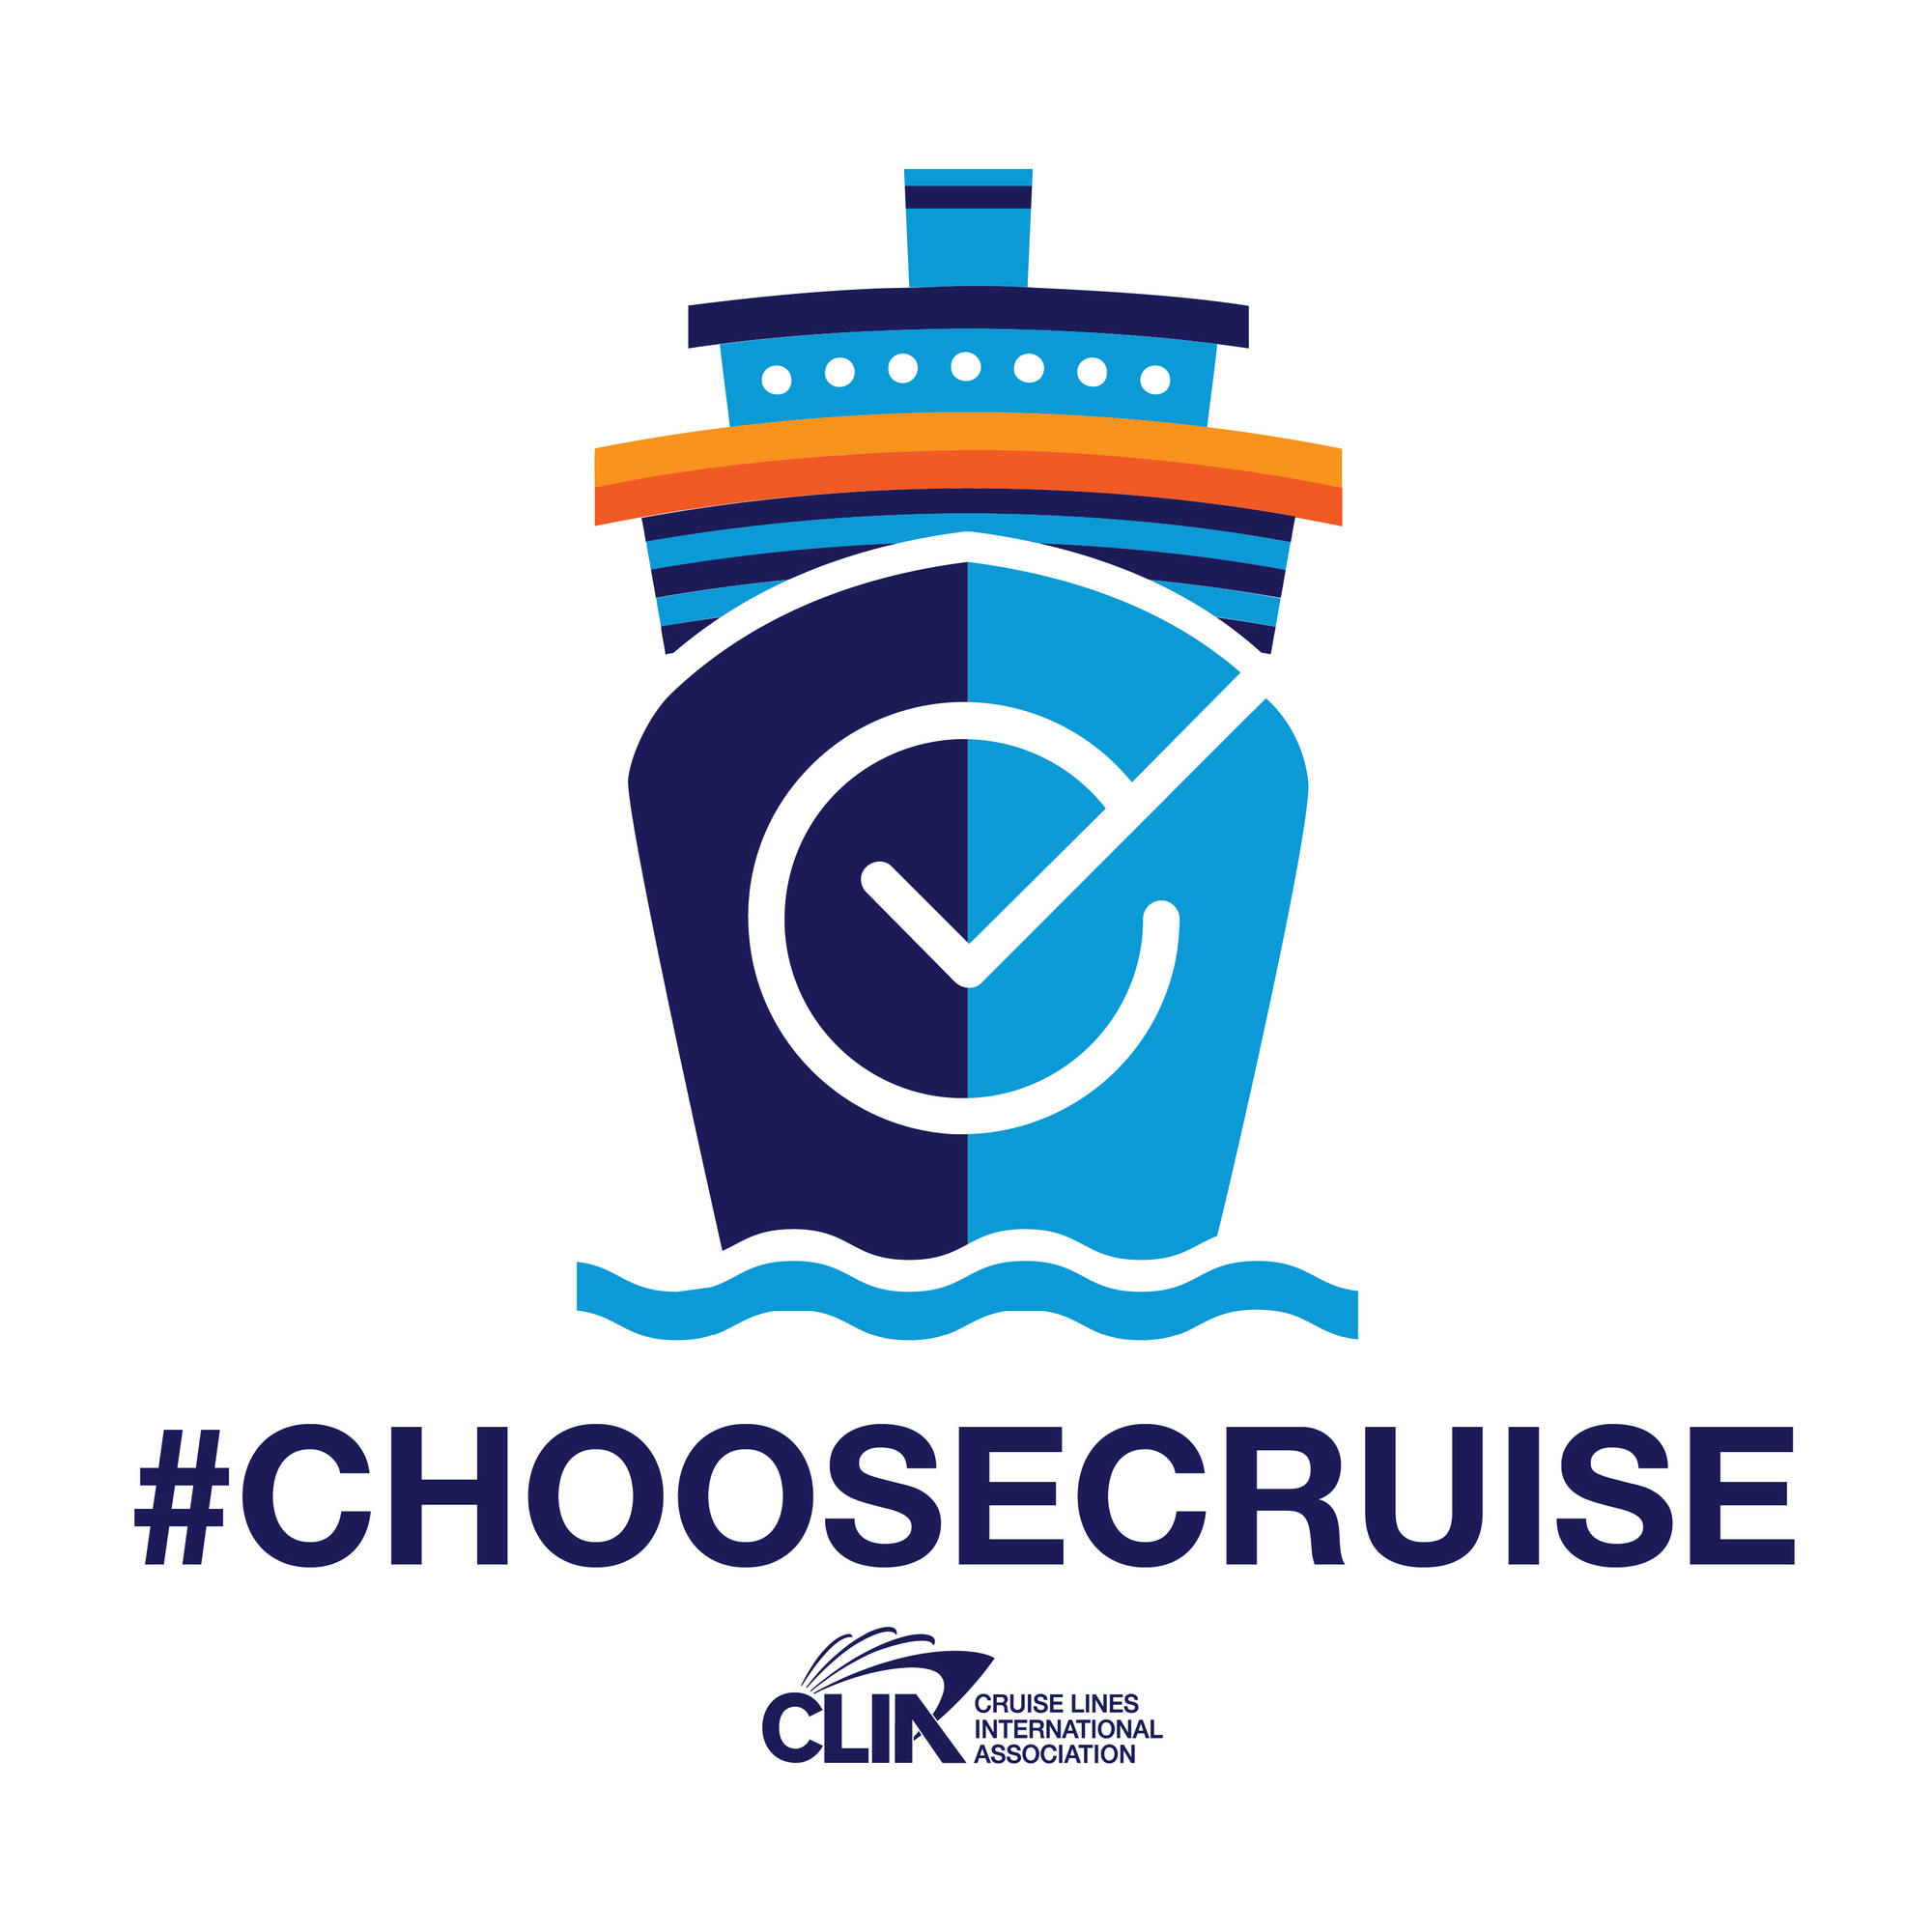 clia_choosecruise_logo_rgb_r_2.jpg